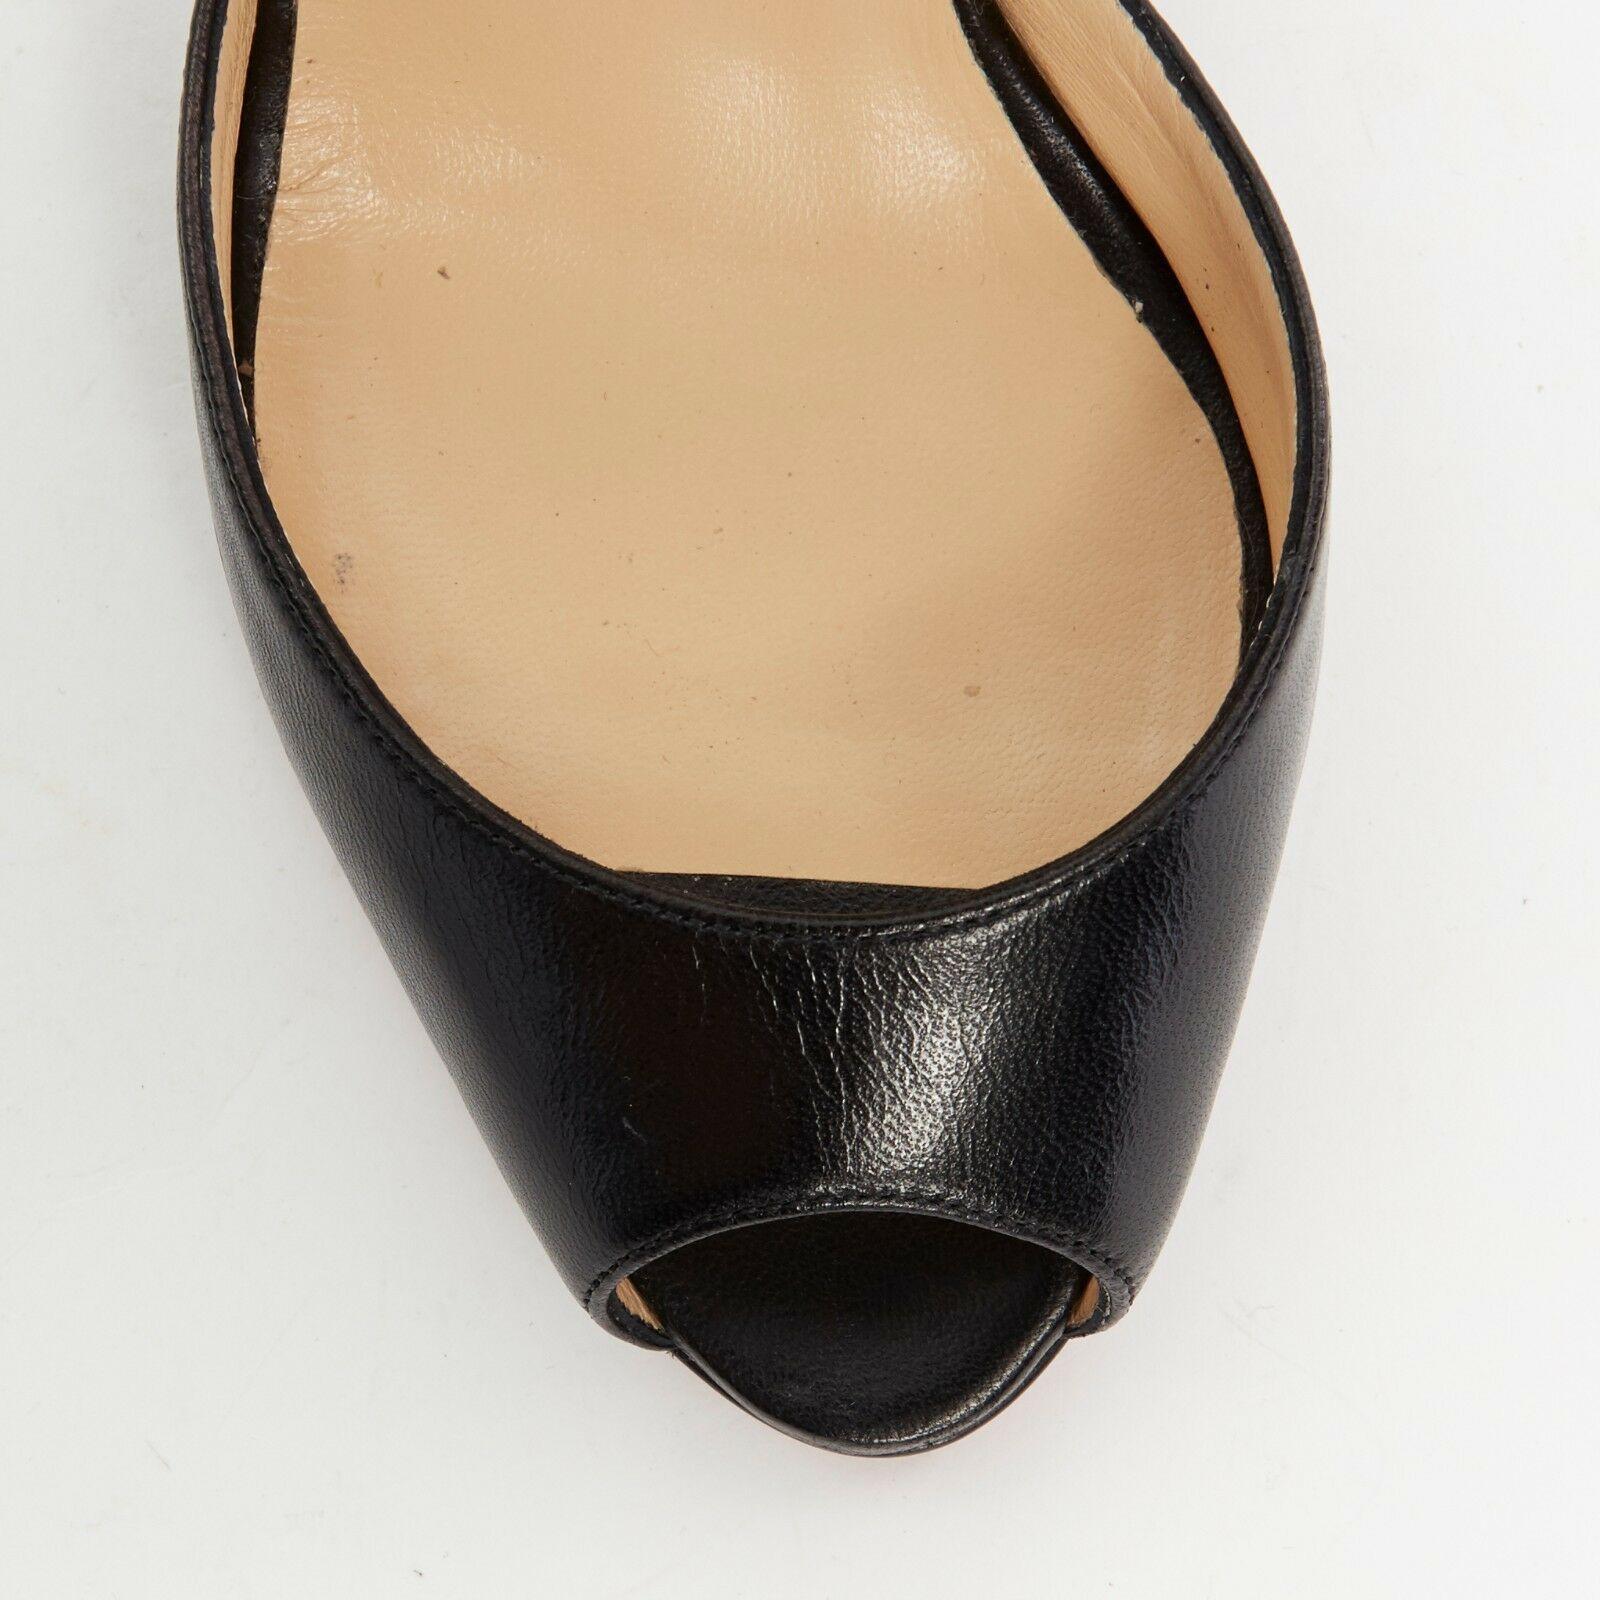 CHRISTIAN LOUBOUTIN Otrot 120 black leather fringe heel peep toe pumps EU37 US7 2